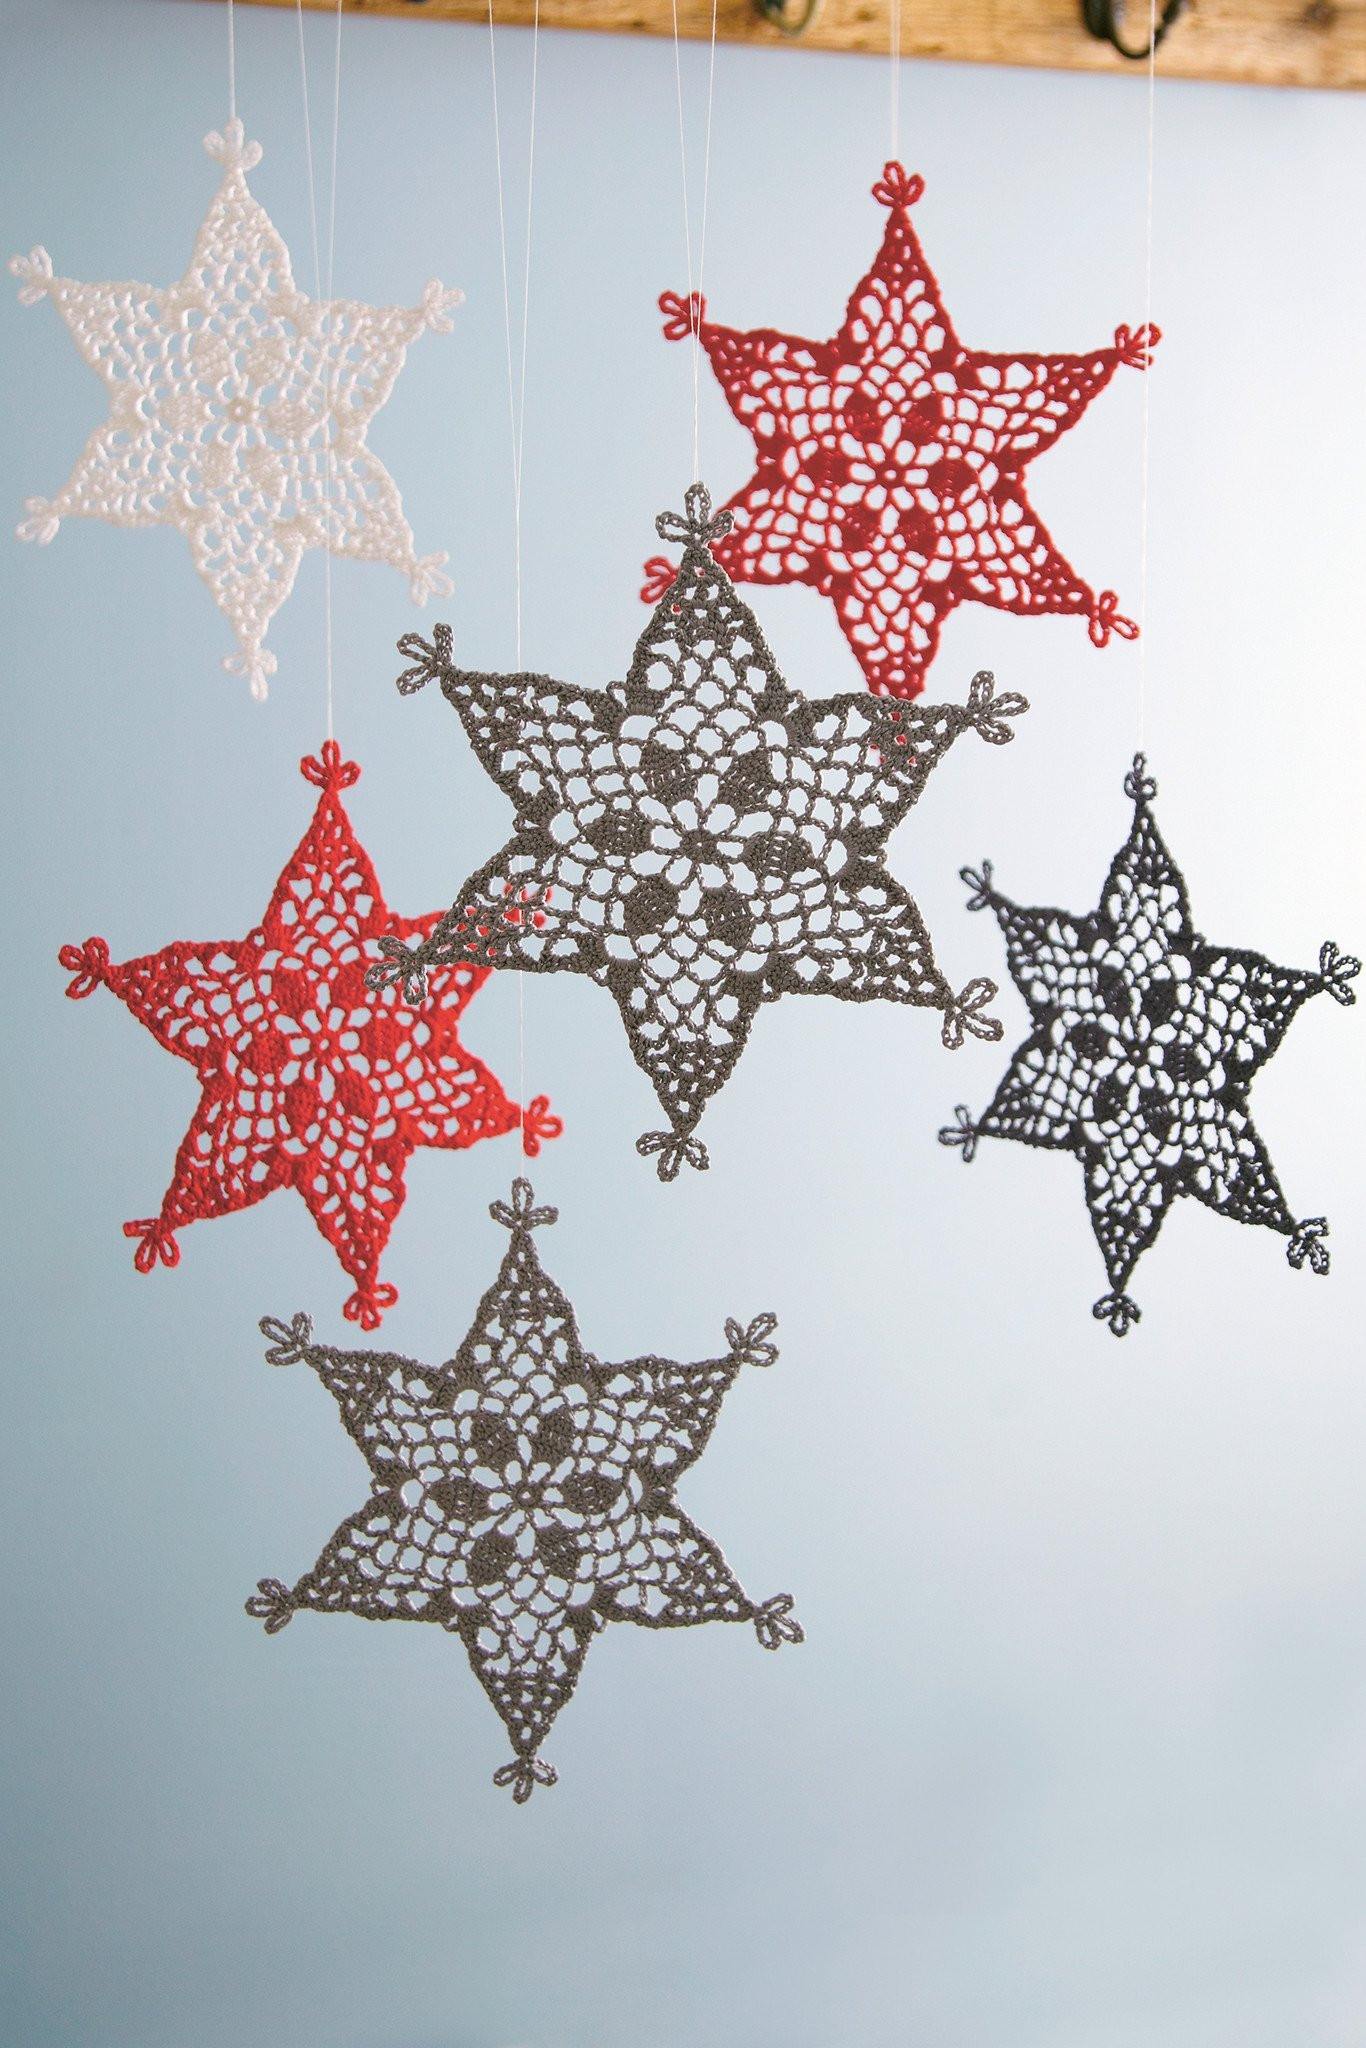 Snowflake Crochet Pattern